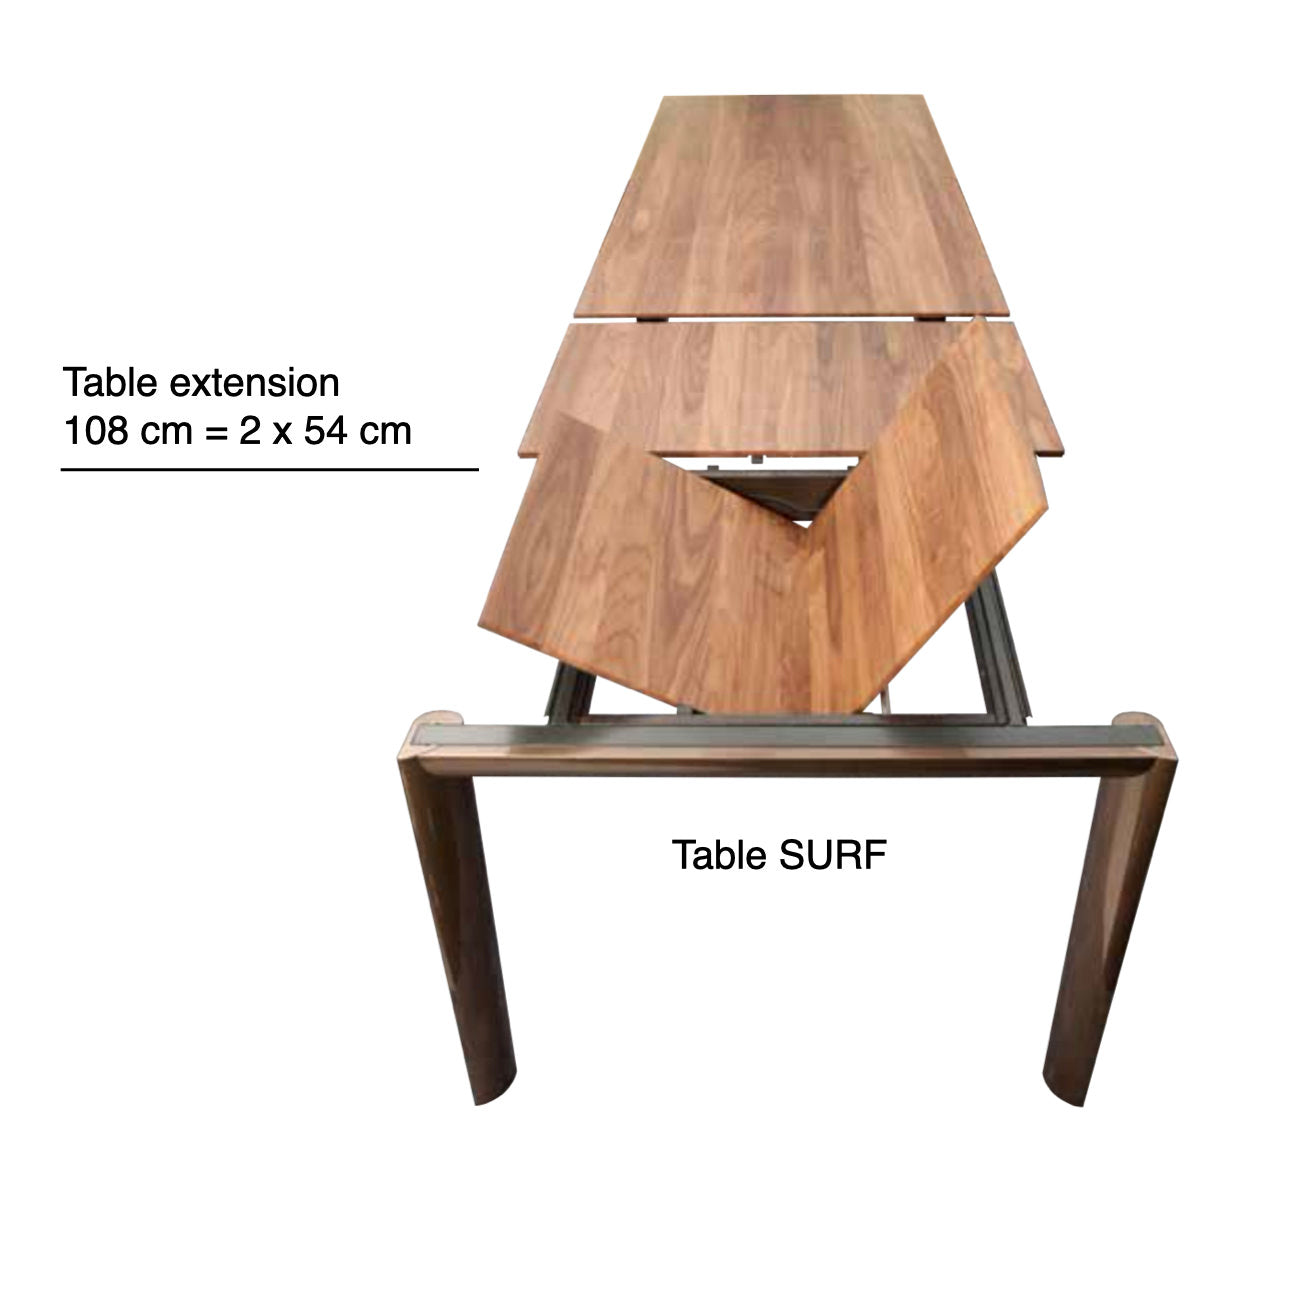 SURF table by Christine Kröncke Interior Design